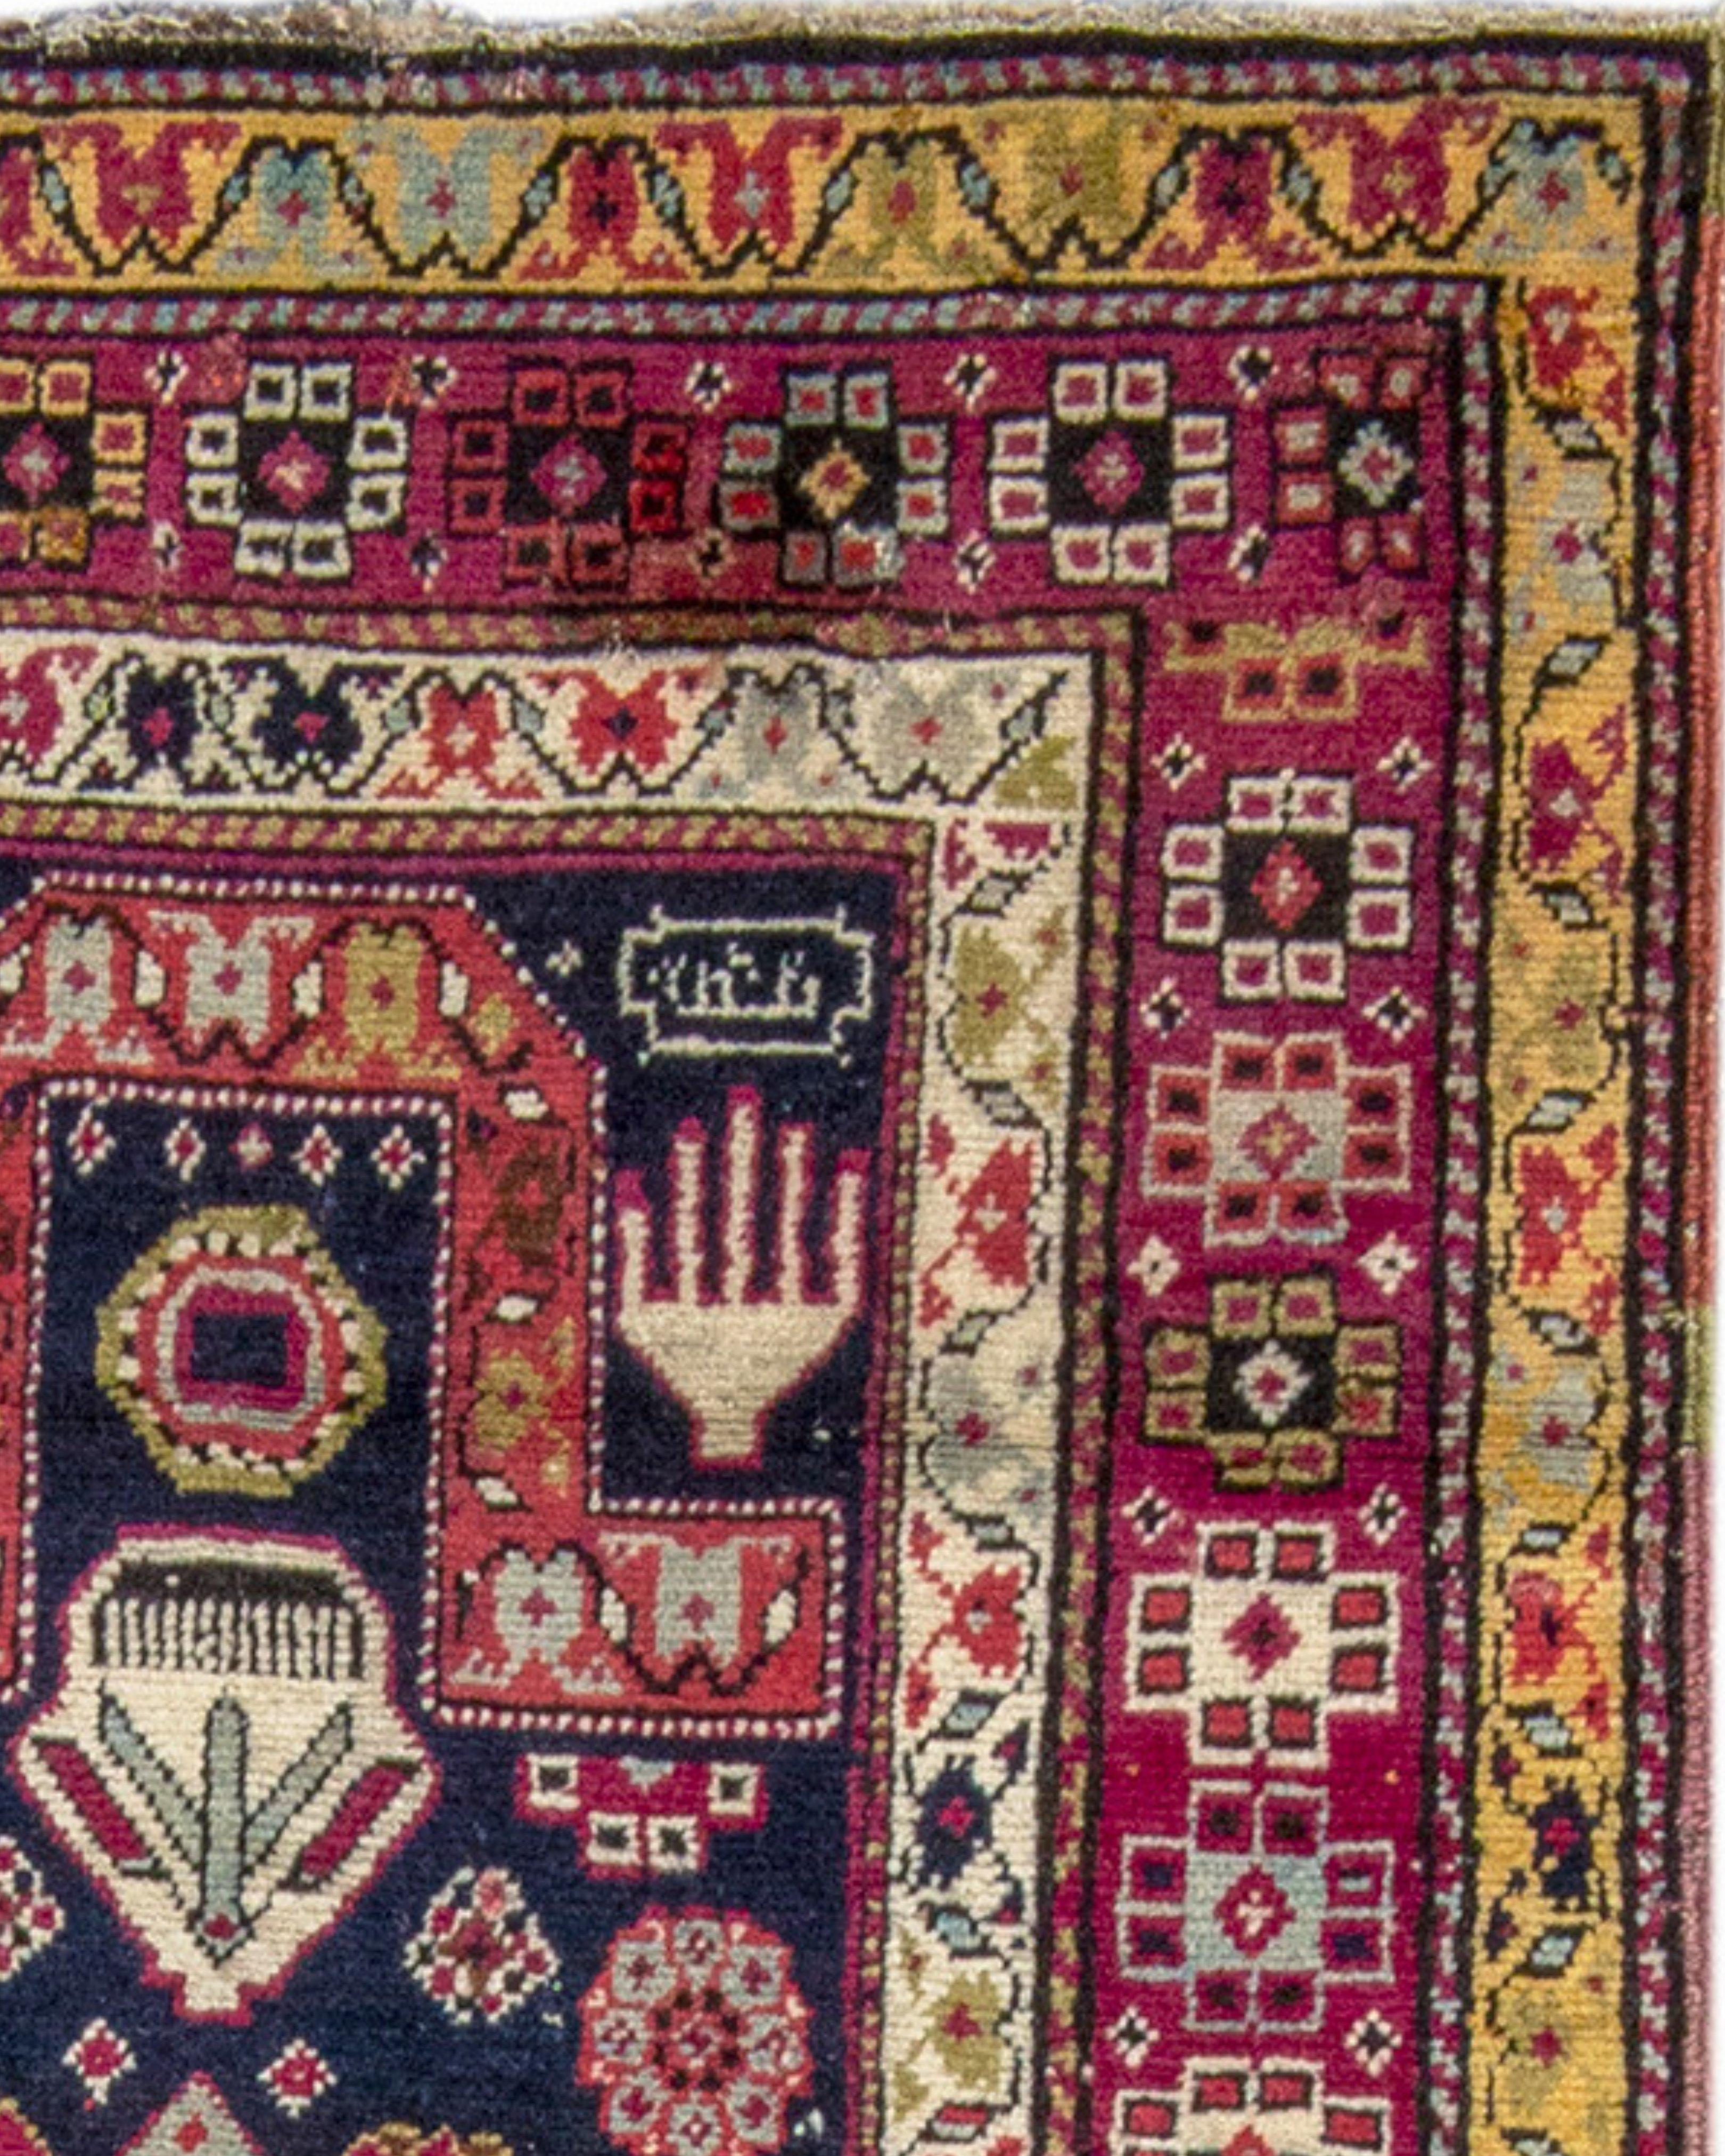 Antique Karabagh Prayer Rug, 19th Century

Additional Information:
Dimensions: 5'9